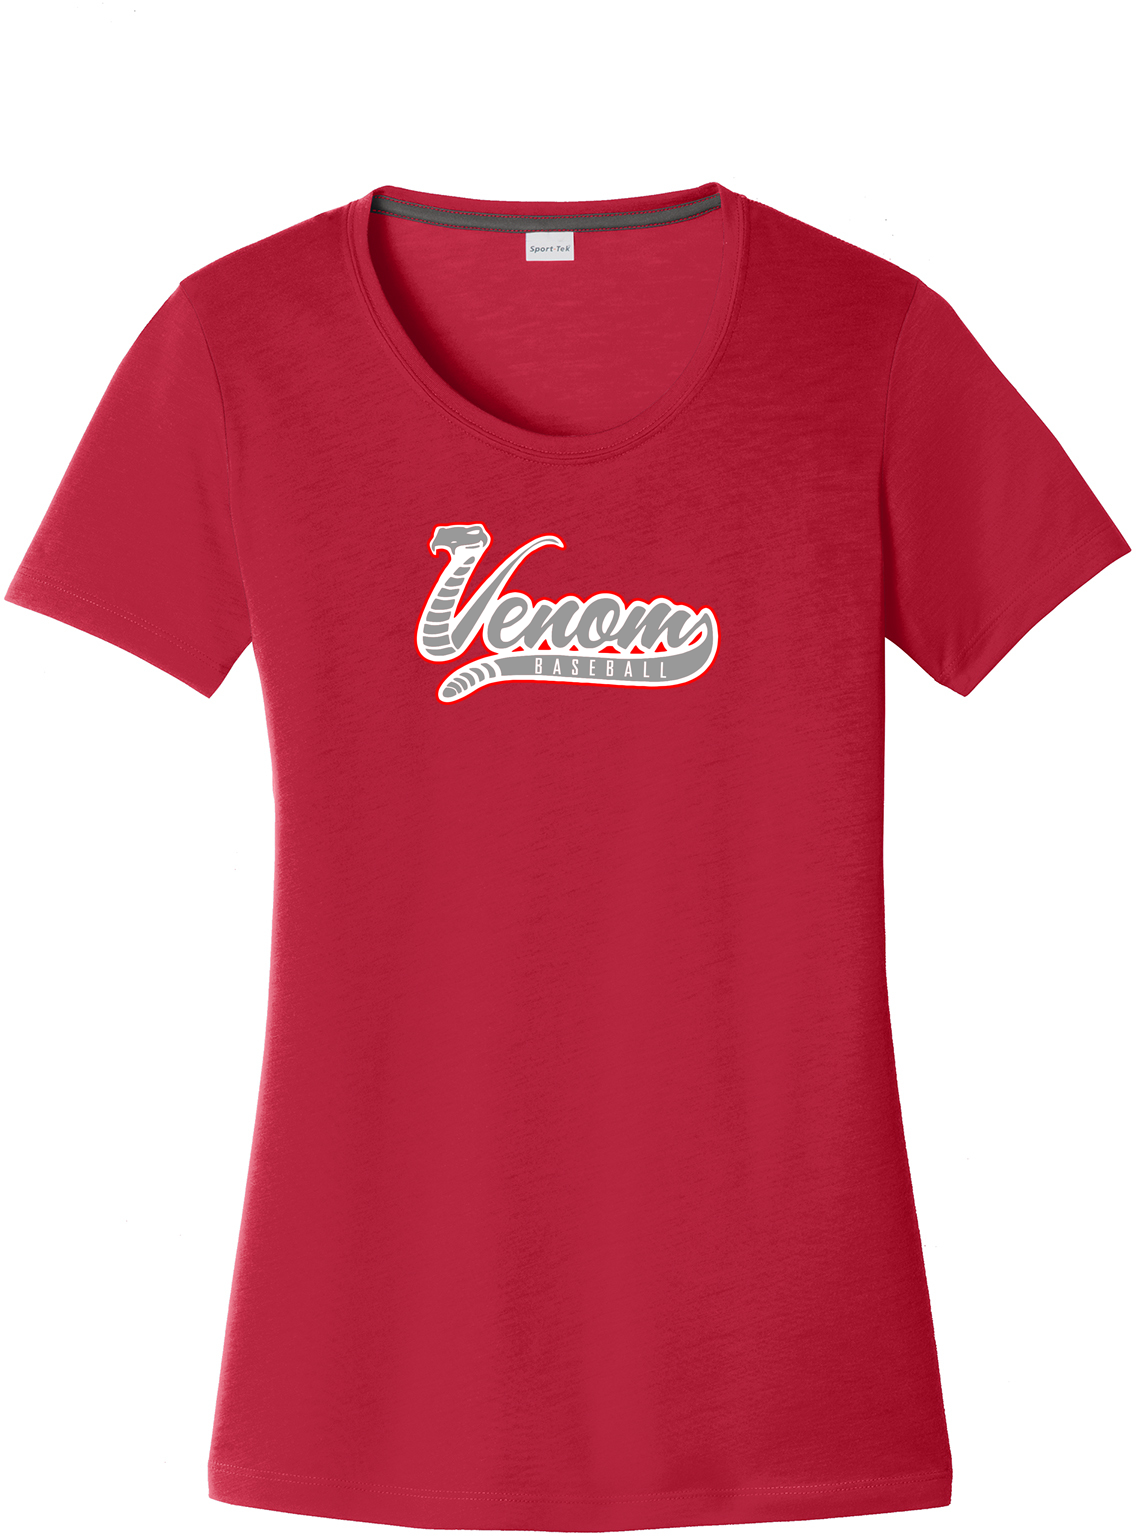 Valley Venom Baseball Women's CottonTouch Performance T-Shirt